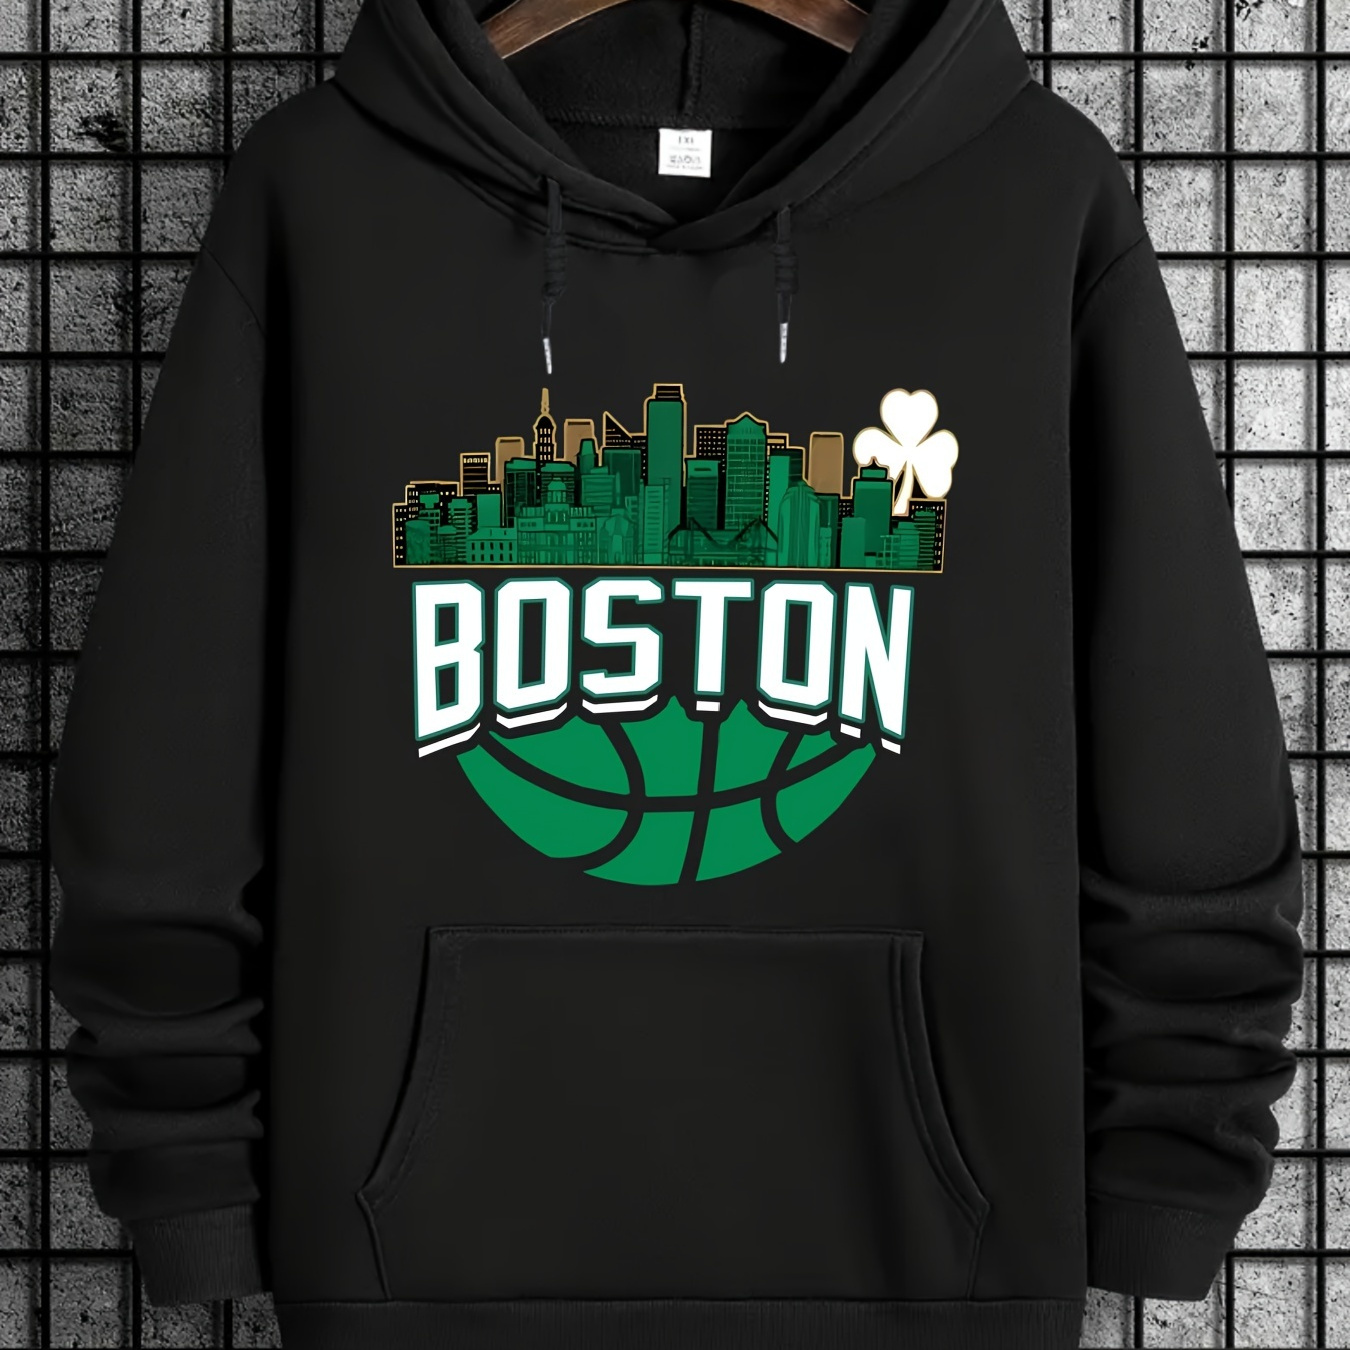 

Boston Basketball Pattern Print Men's Long Sleeve Hoodie, Drawstring Hooded Sweatshirt With Kangaroo Pocket, Casual Cozy Versatile Top For Autumn & Winter